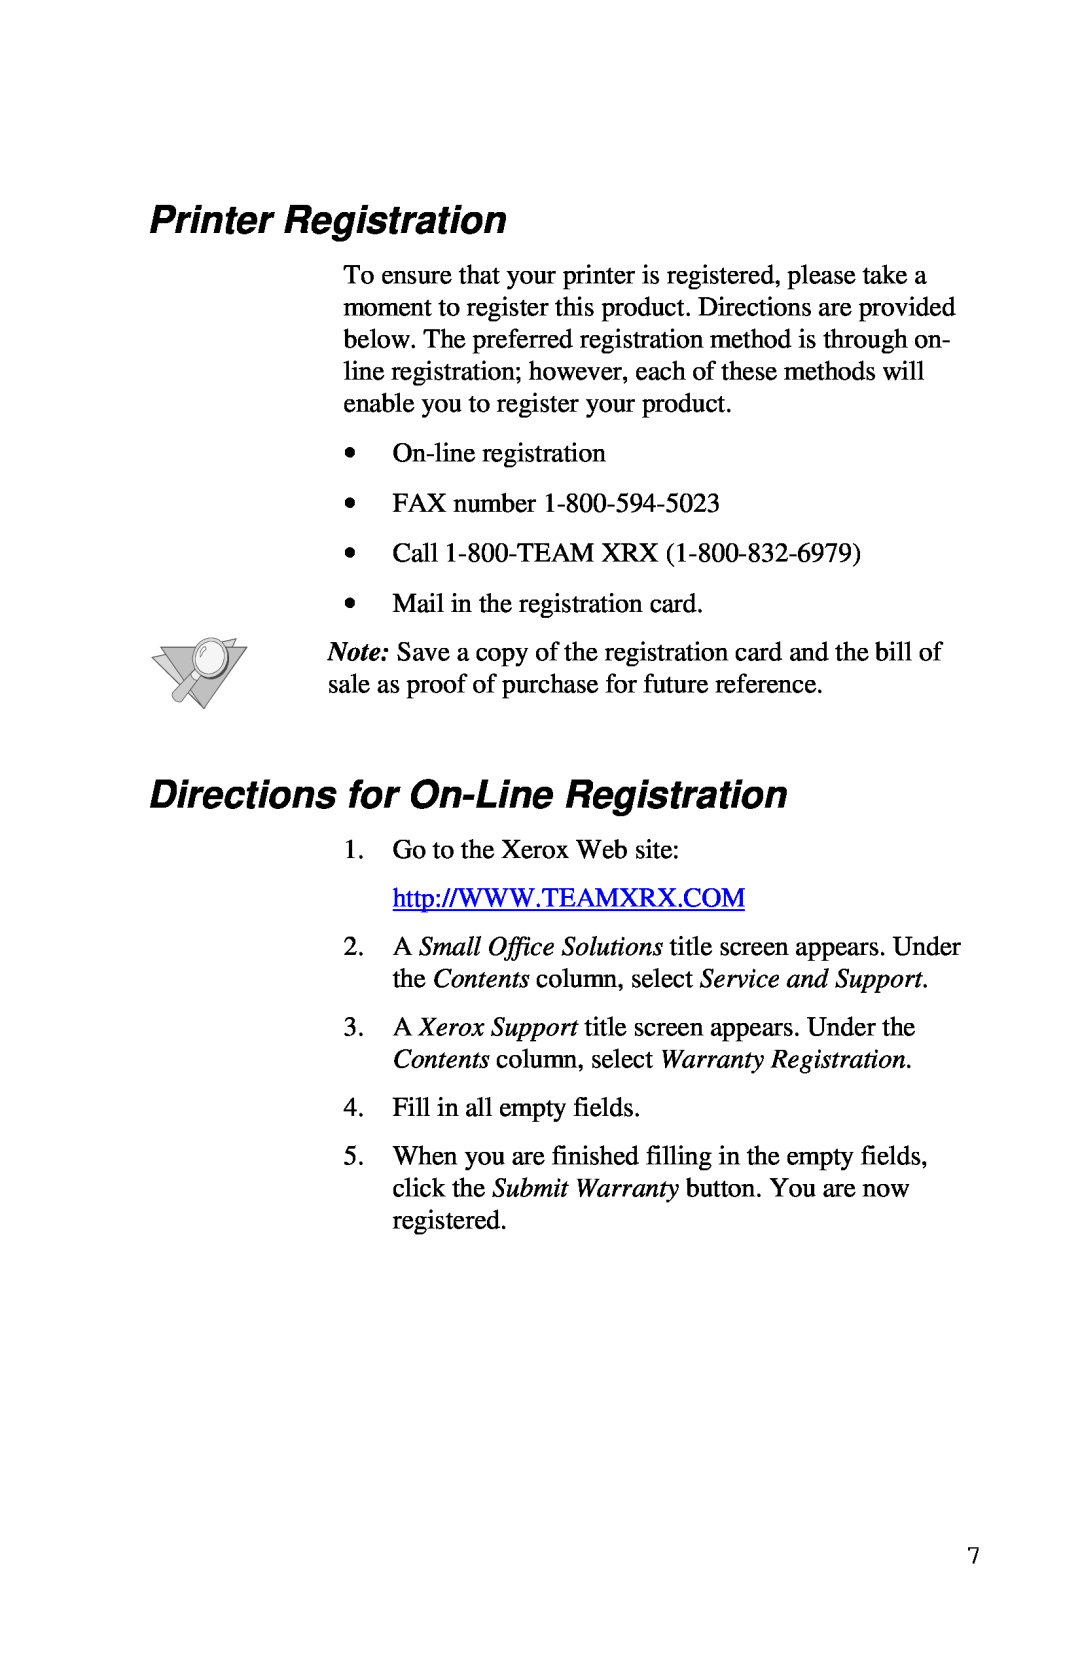 Xerox Inkjet Printer manual Printer Registration, Directions for On-LineRegistration 